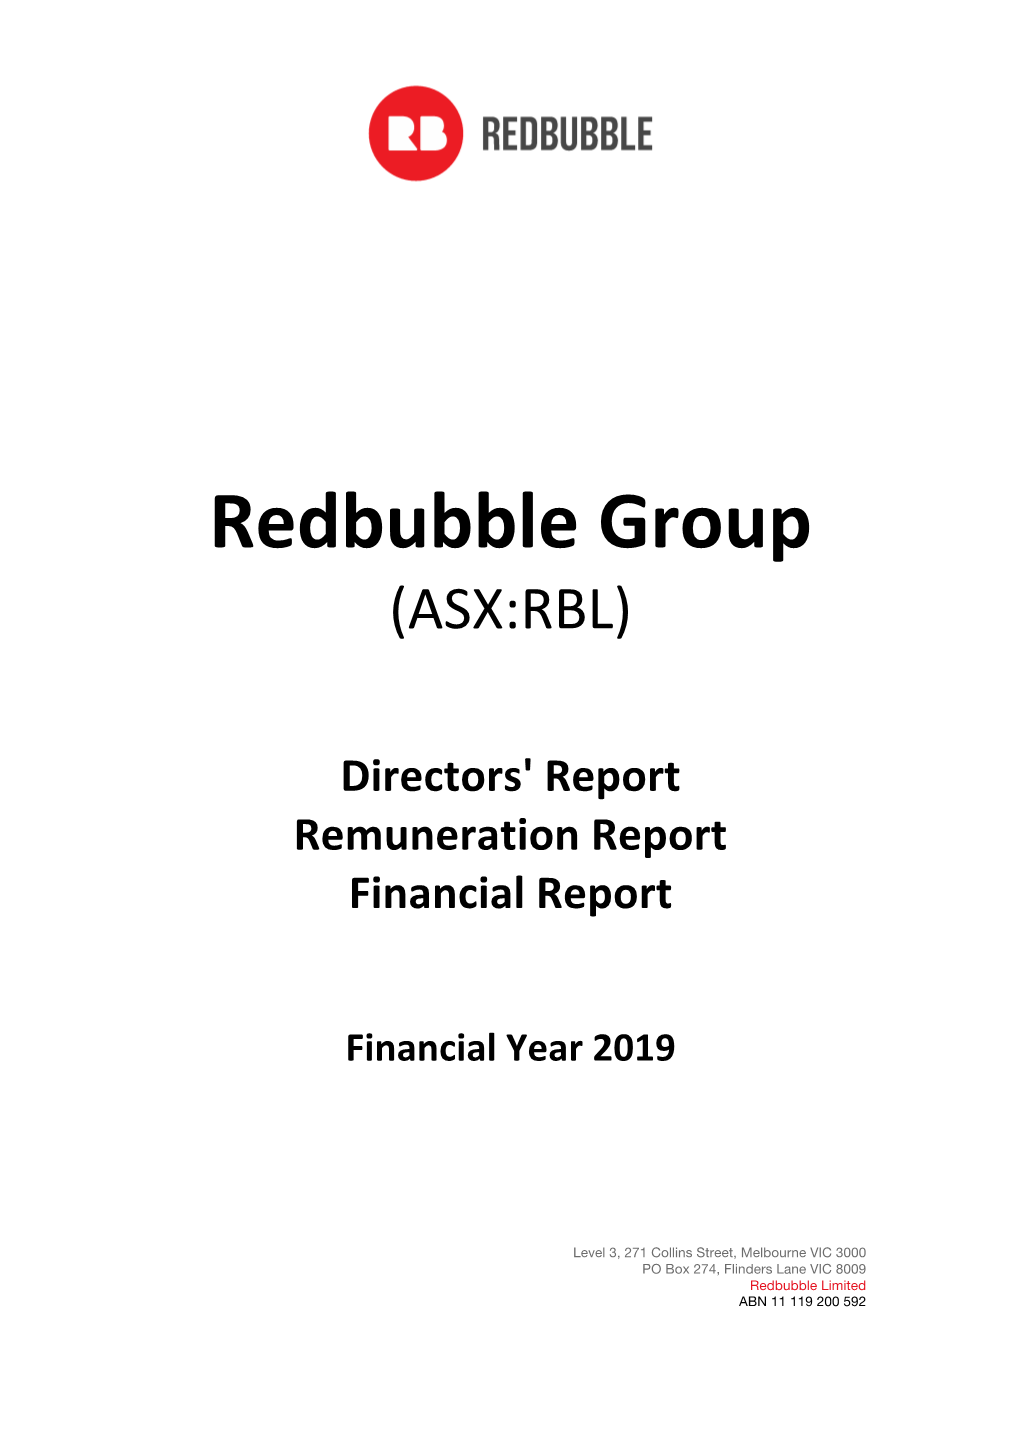 Directors' Report, Remuneration Report and Financial